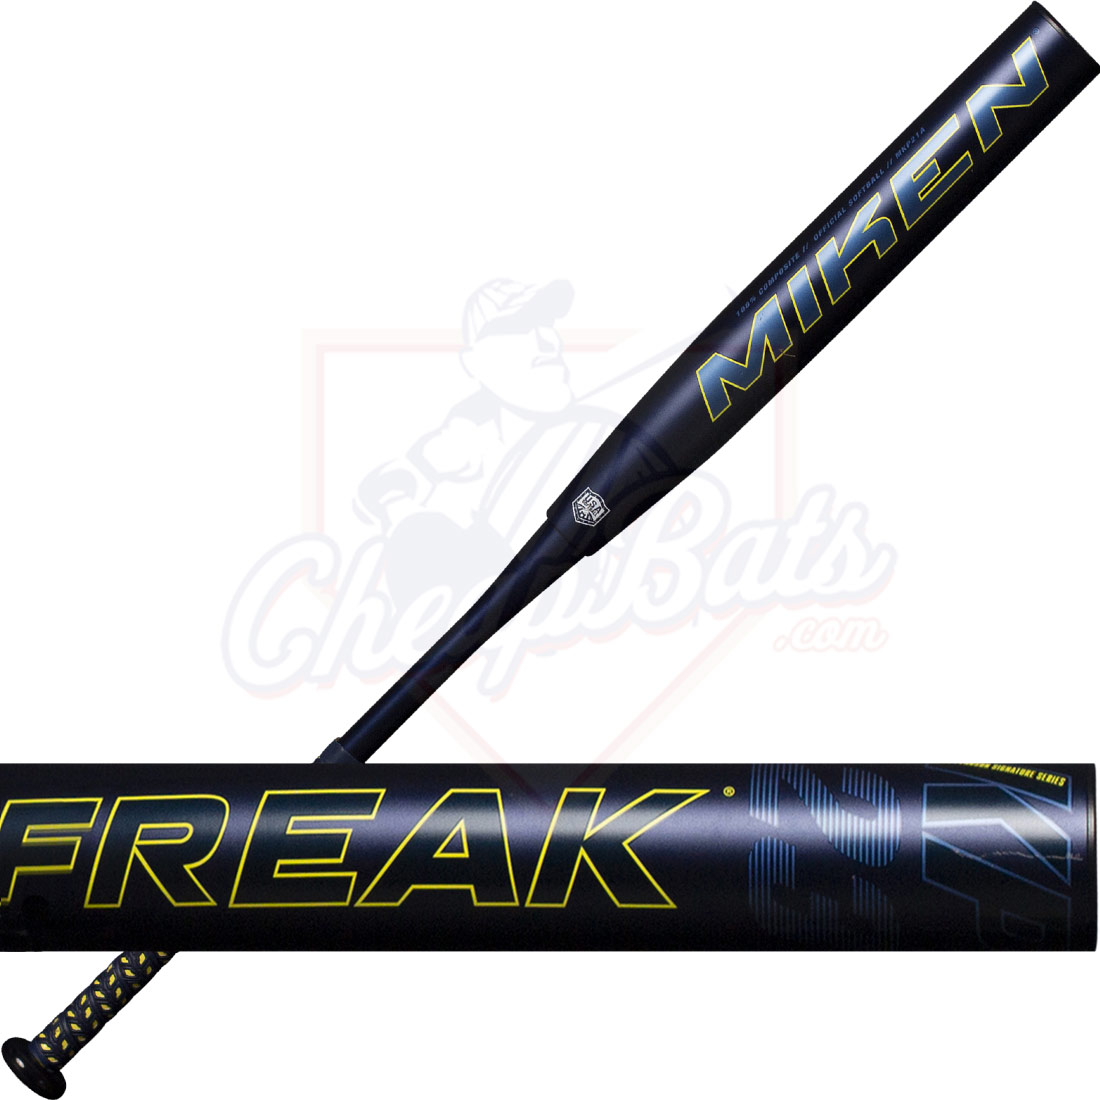 2021 Miken Freak 23 Slowpitch Softball Bat Maxload ASA USA MKP21A